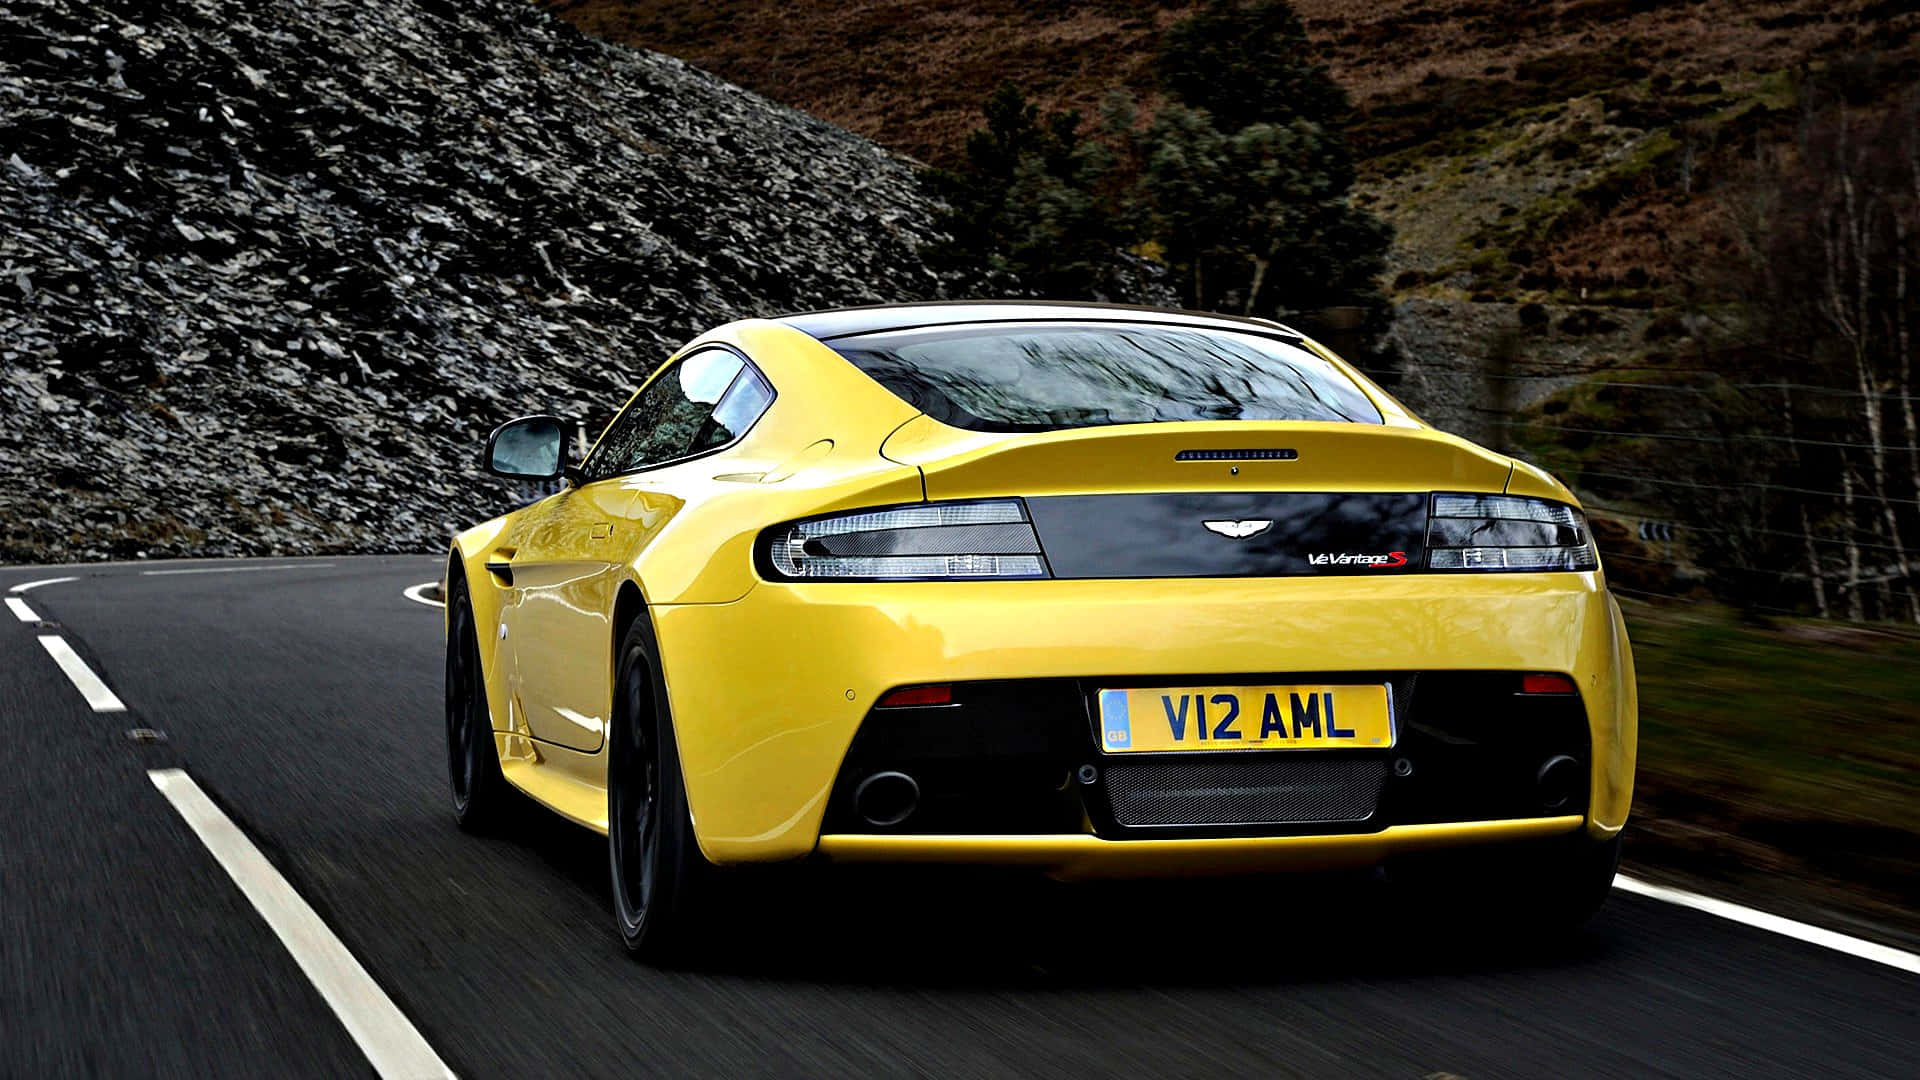 Caption: Aston Martin Vantage - Luxurious Speed and Elegance on the Road Wallpaper